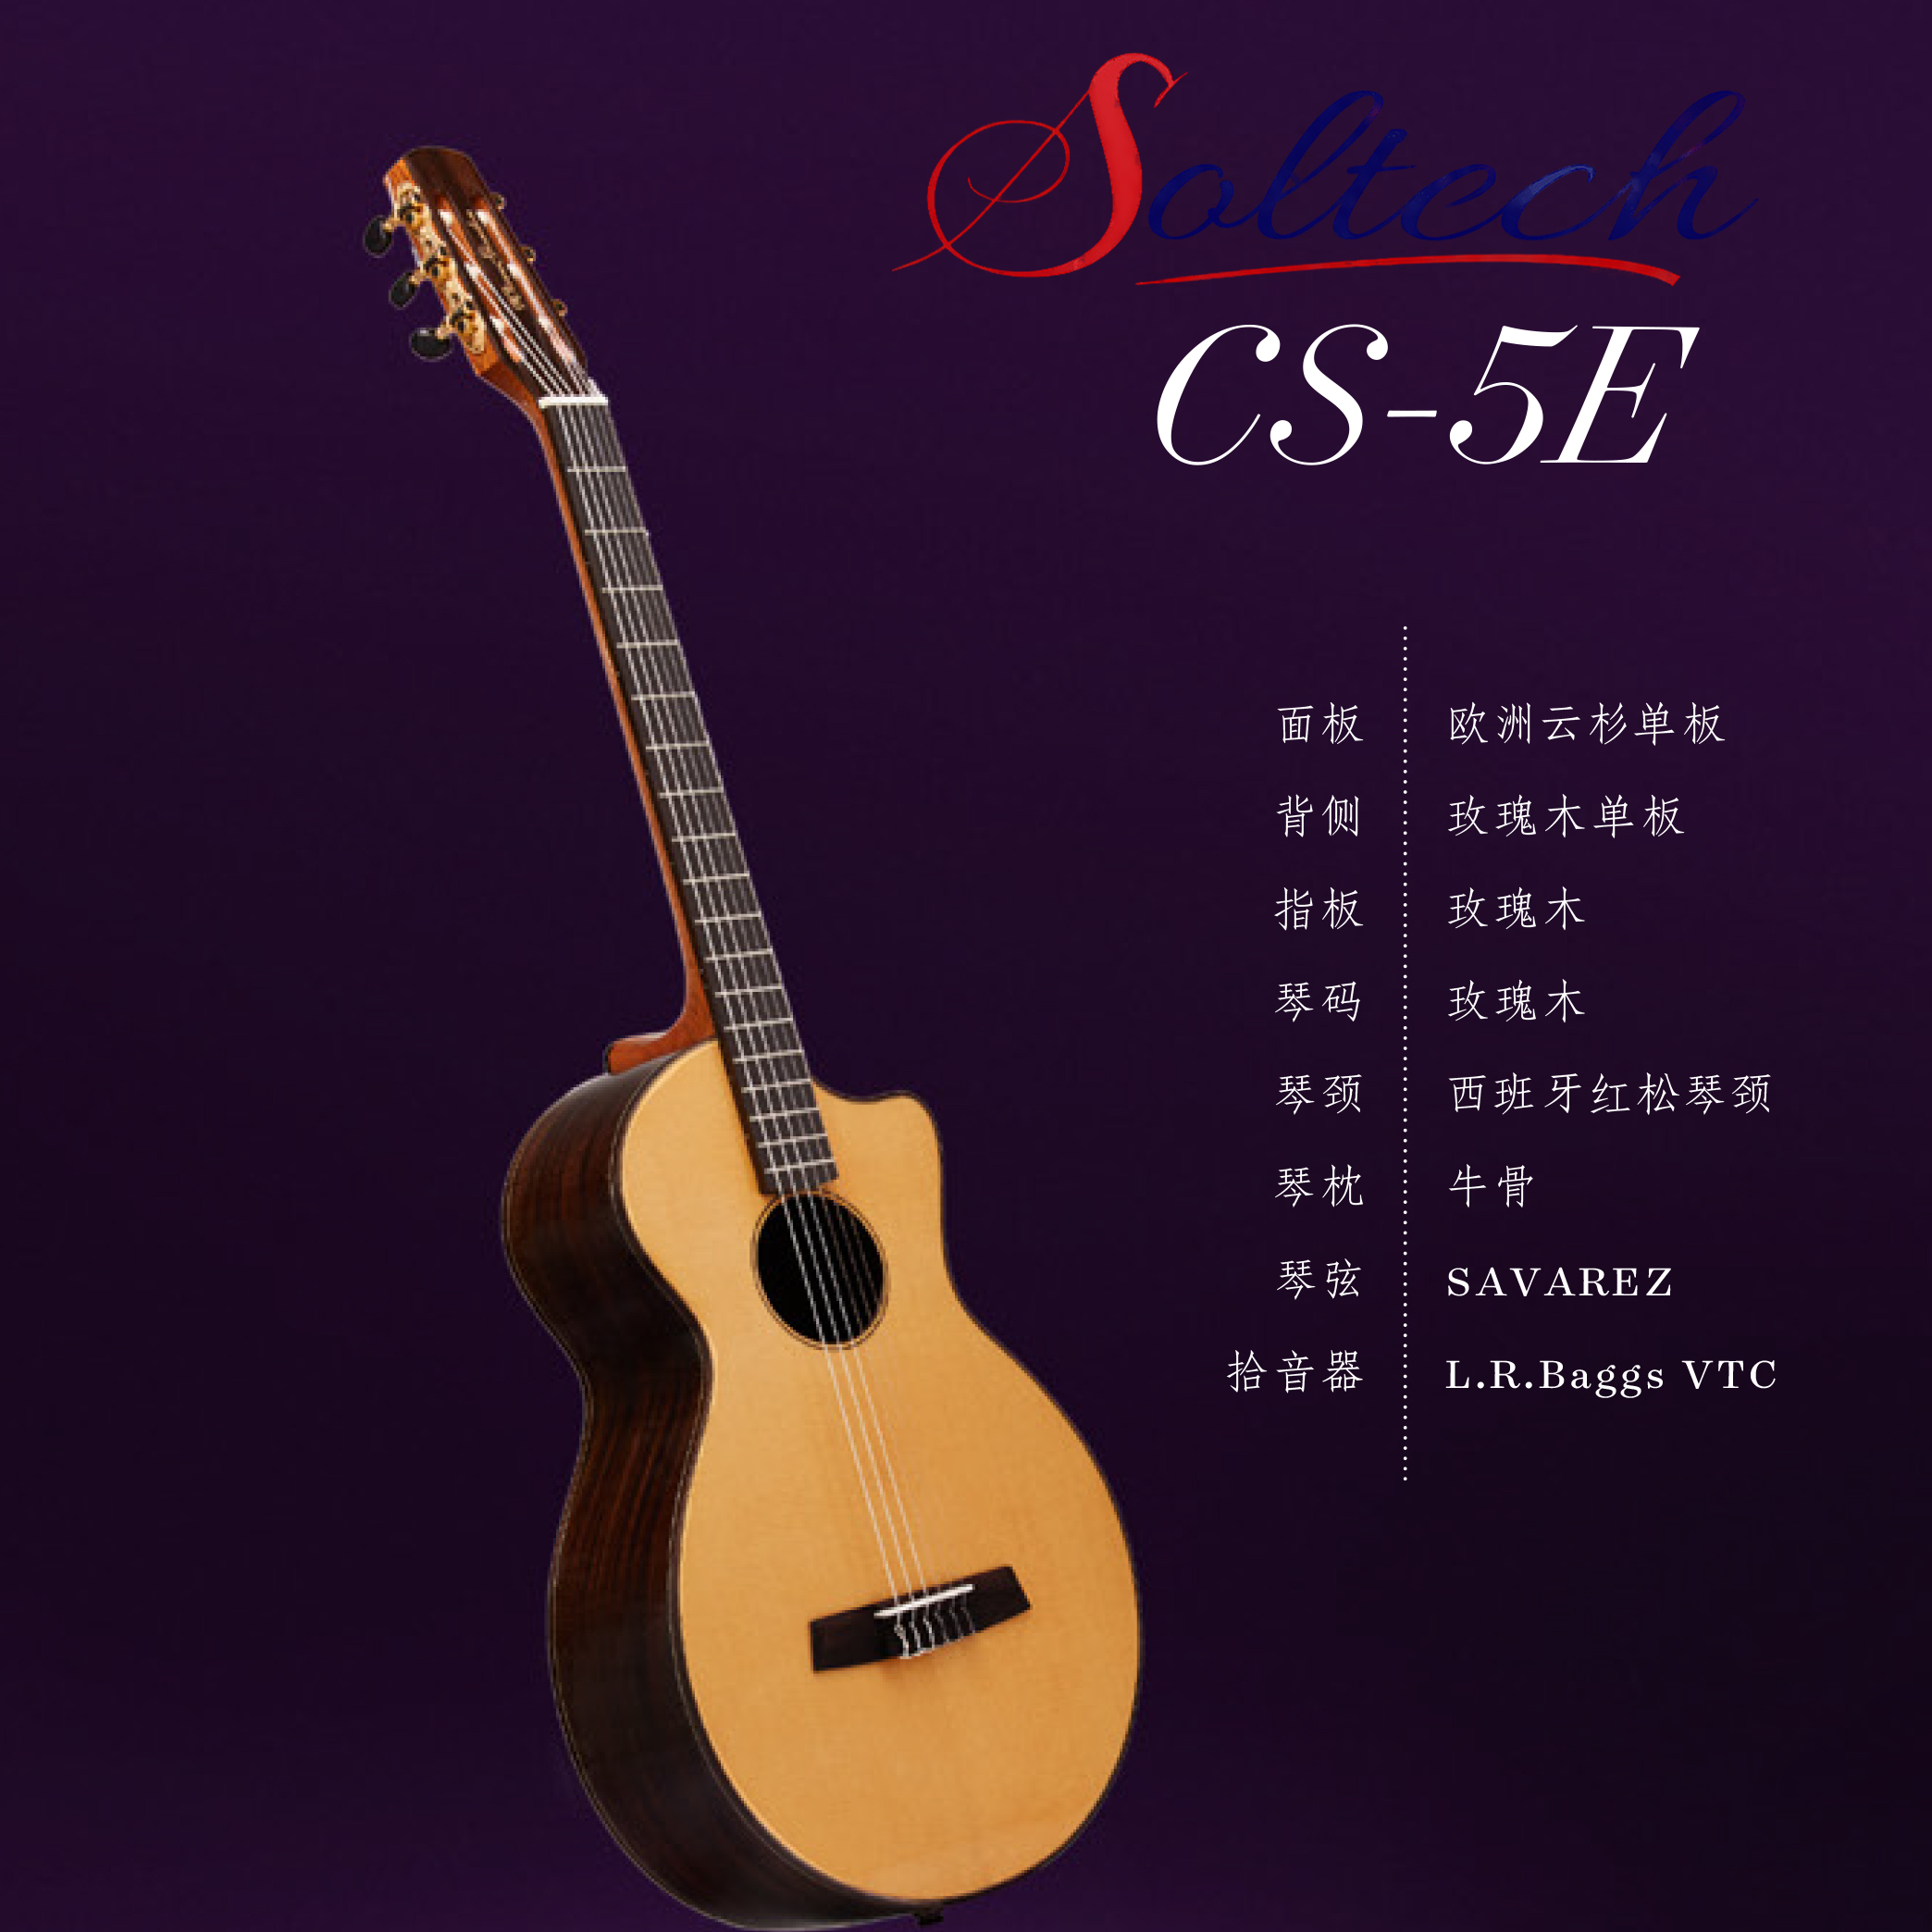 CS-5E Classic Guitar with Machine Head SAVAREZ - Guizhou Soltech 